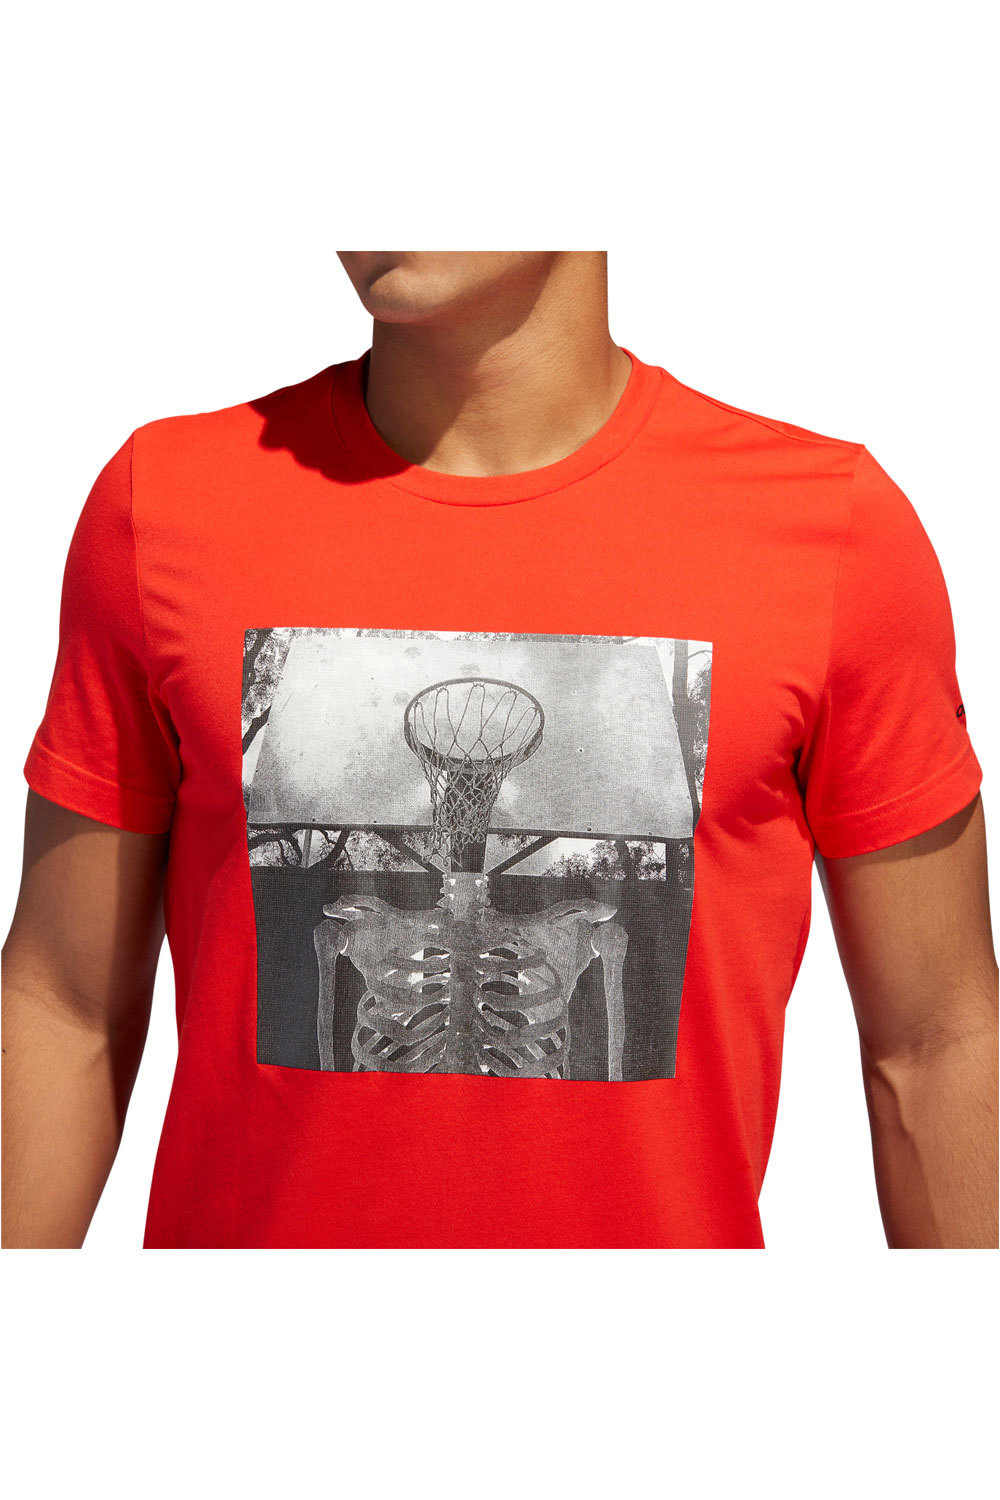 adidas camiseta baloncesto SKULL BALL vista detalle